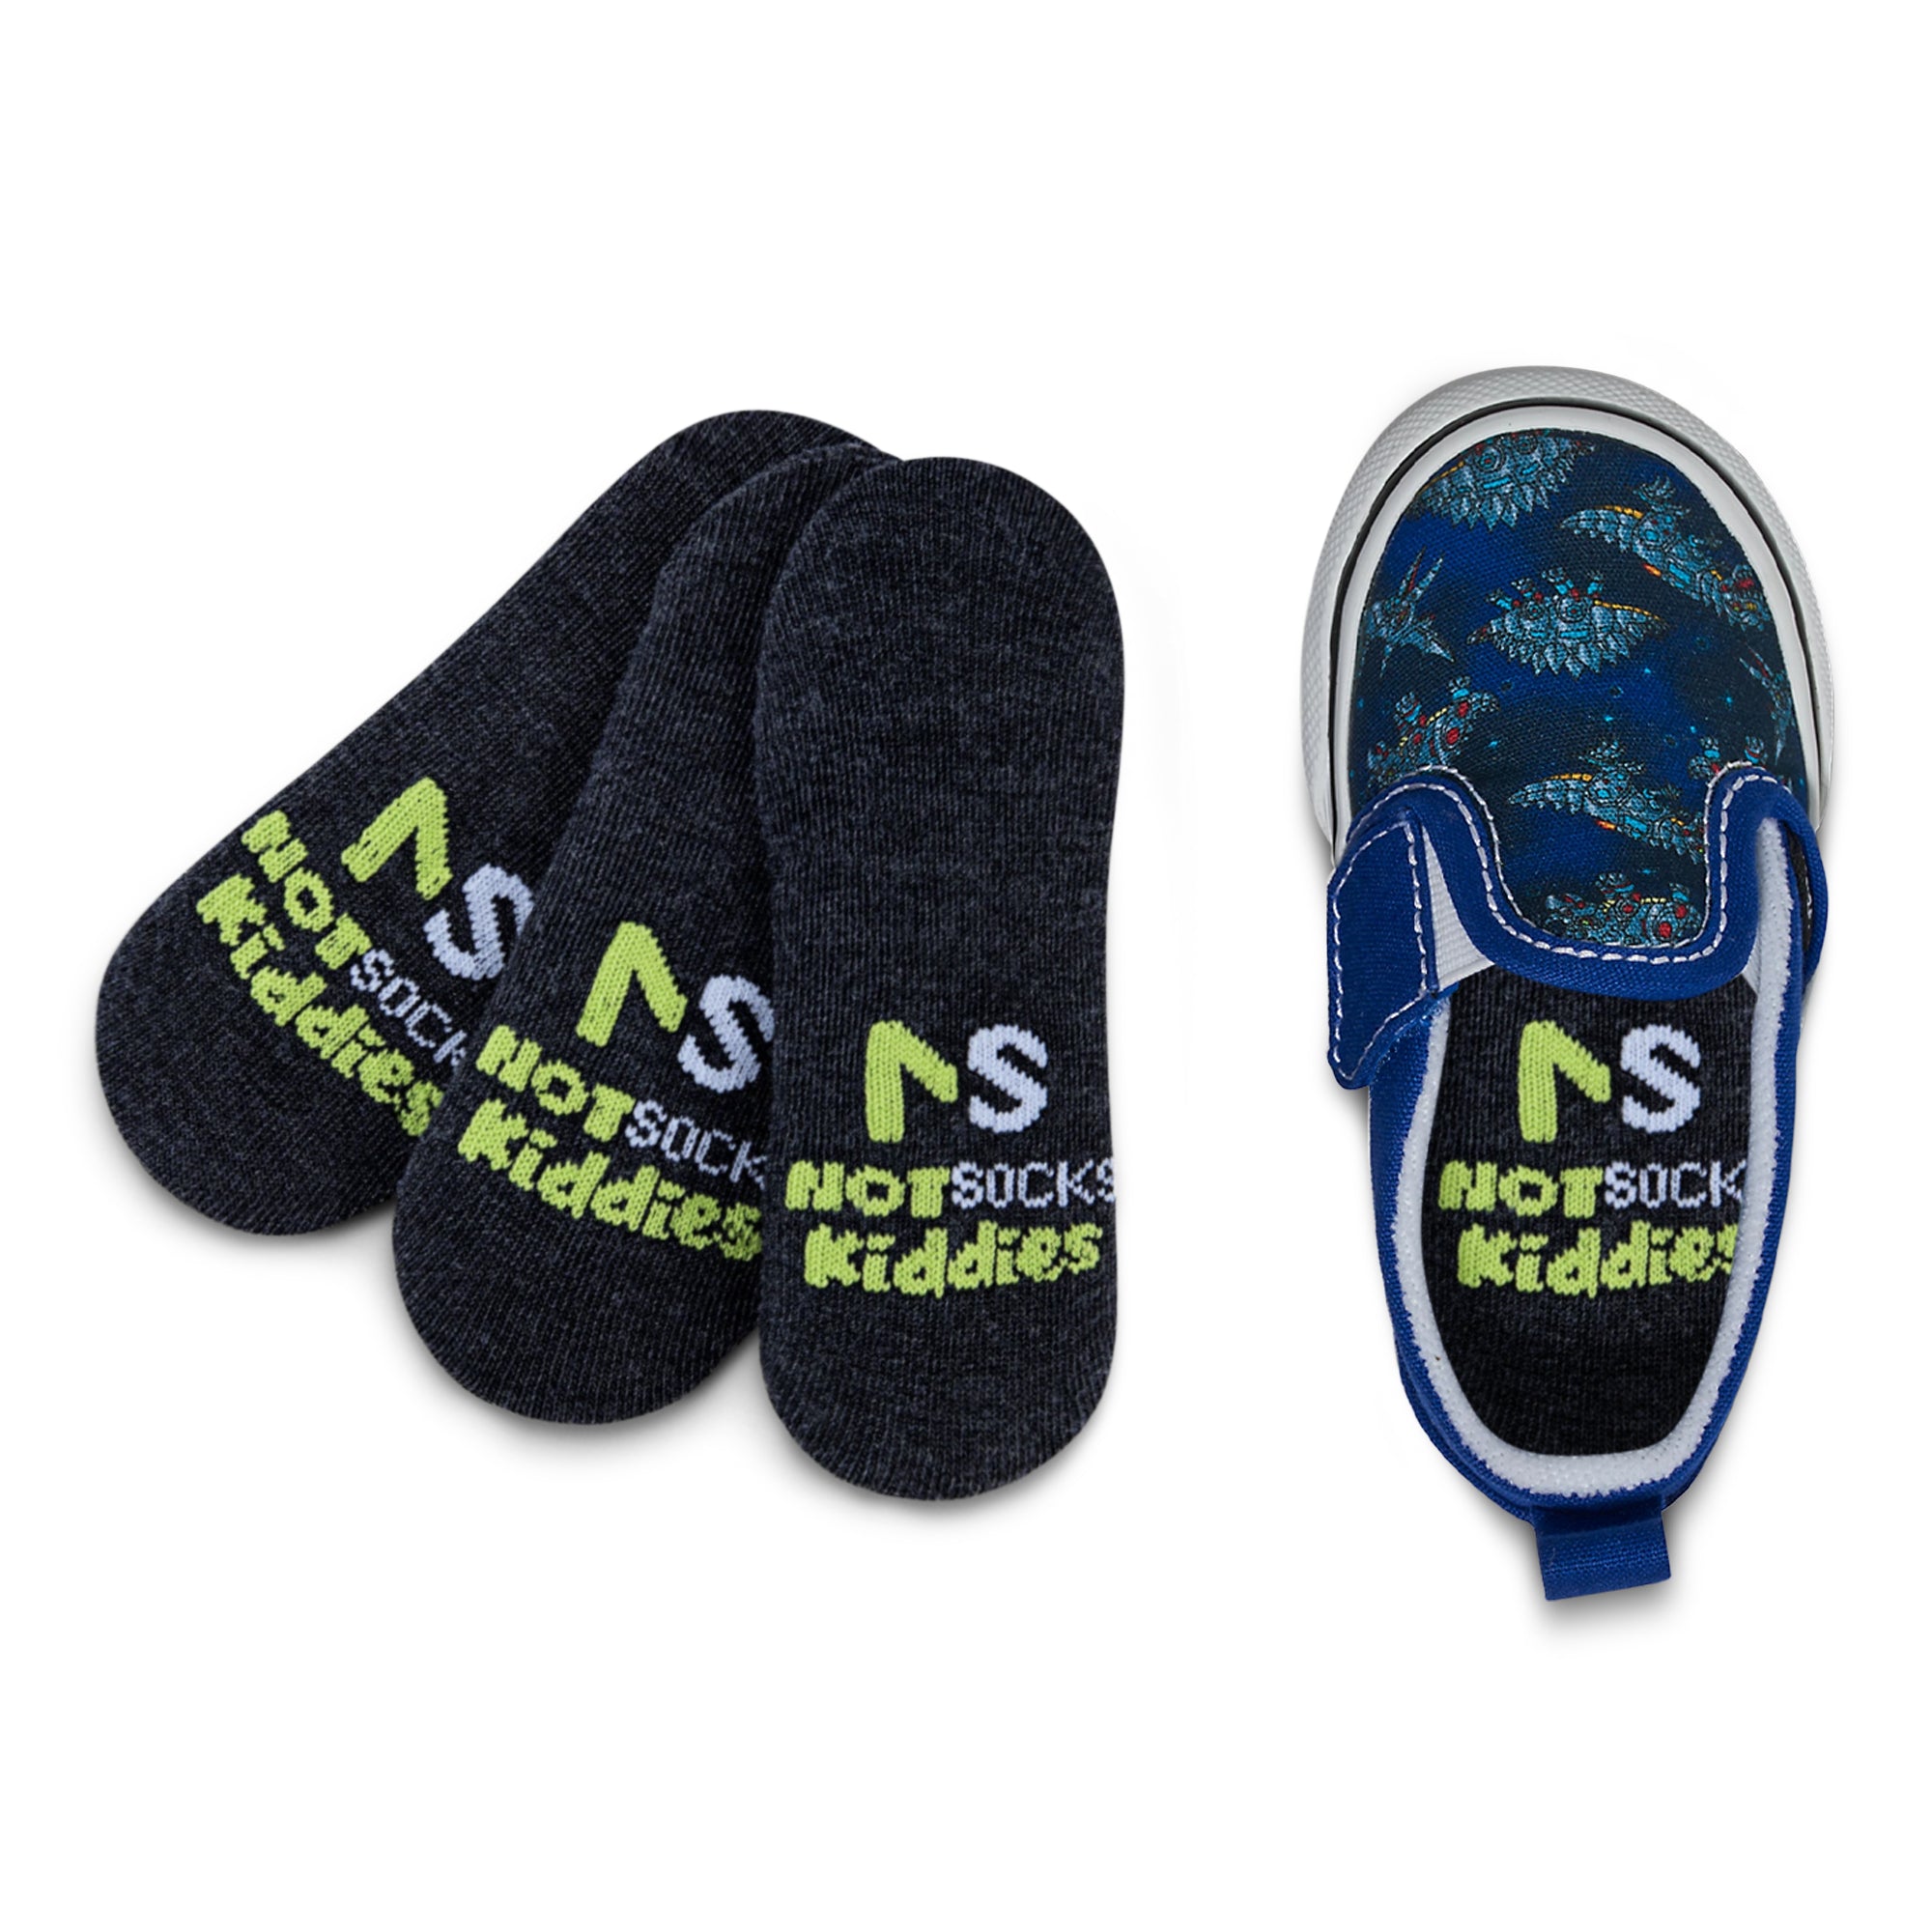 NotSocks Kids Insole Socks Only (3-Pack)